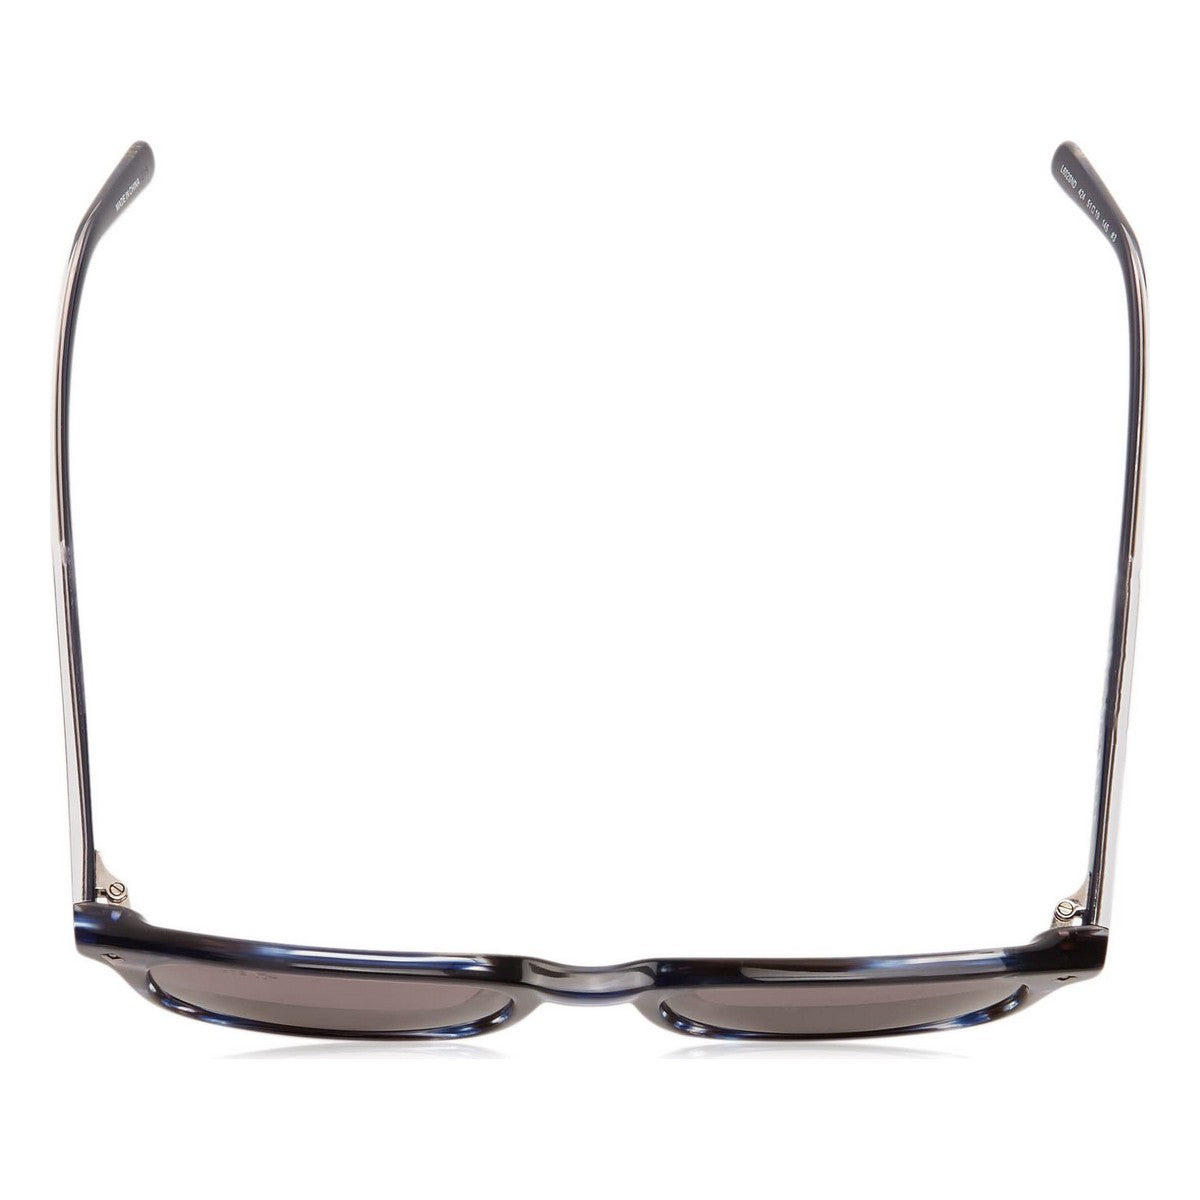 Kaufe Herrensonnenbrille Lacoste L602SND-424 bei AWK Flagship um € 68.00